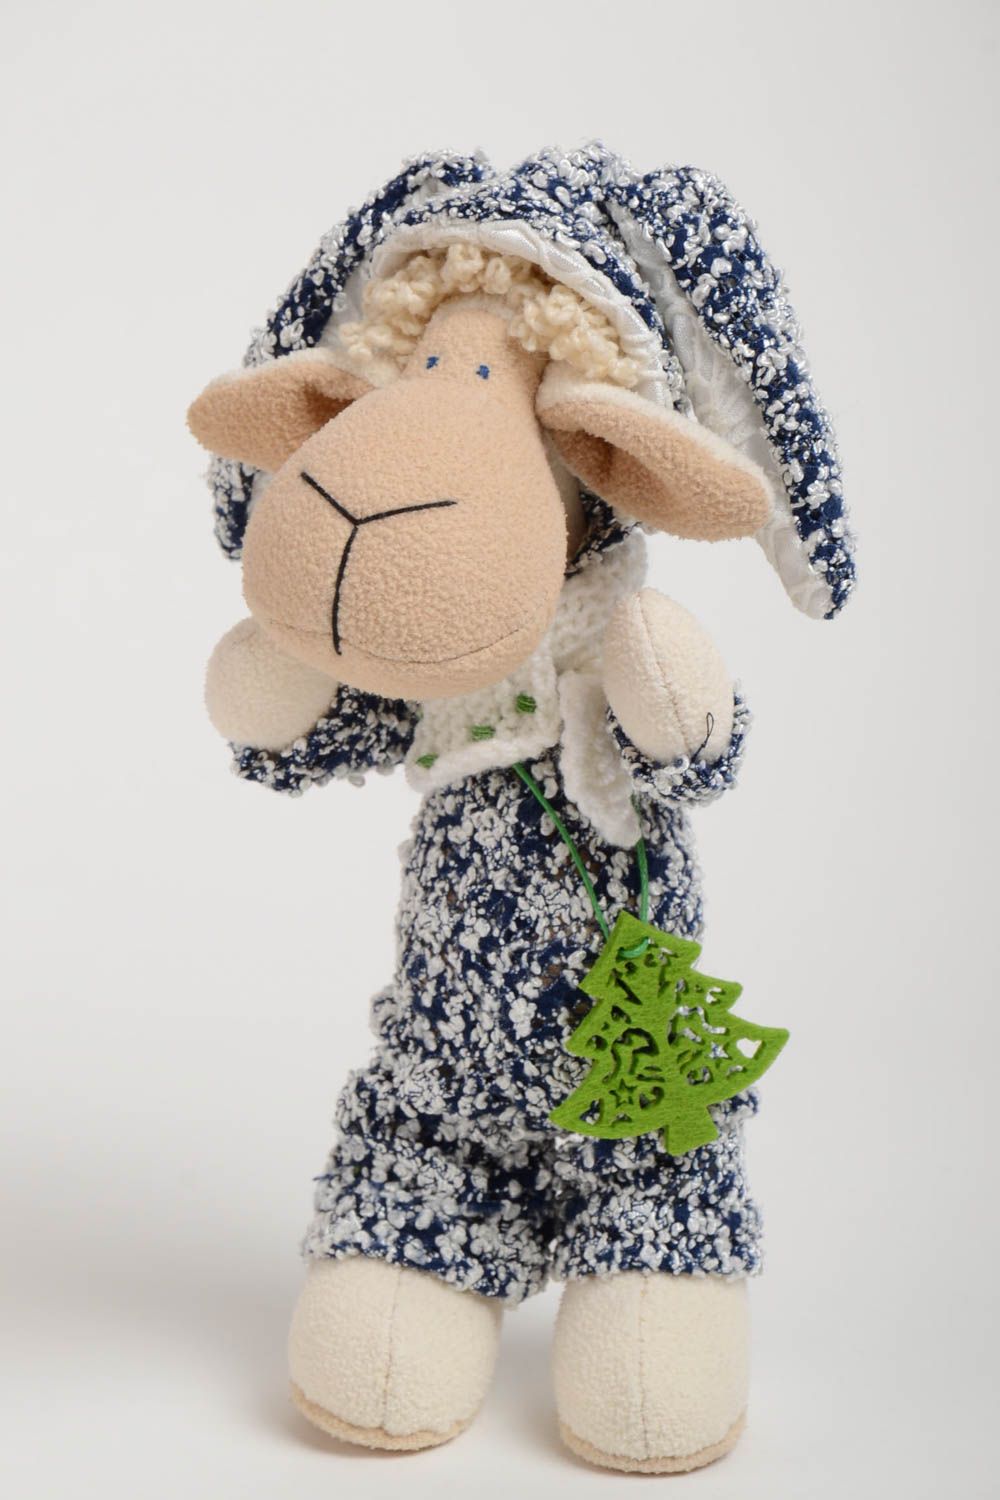 Felt handmade decorative stuffed toy soft little lamb for children and interior photo 2